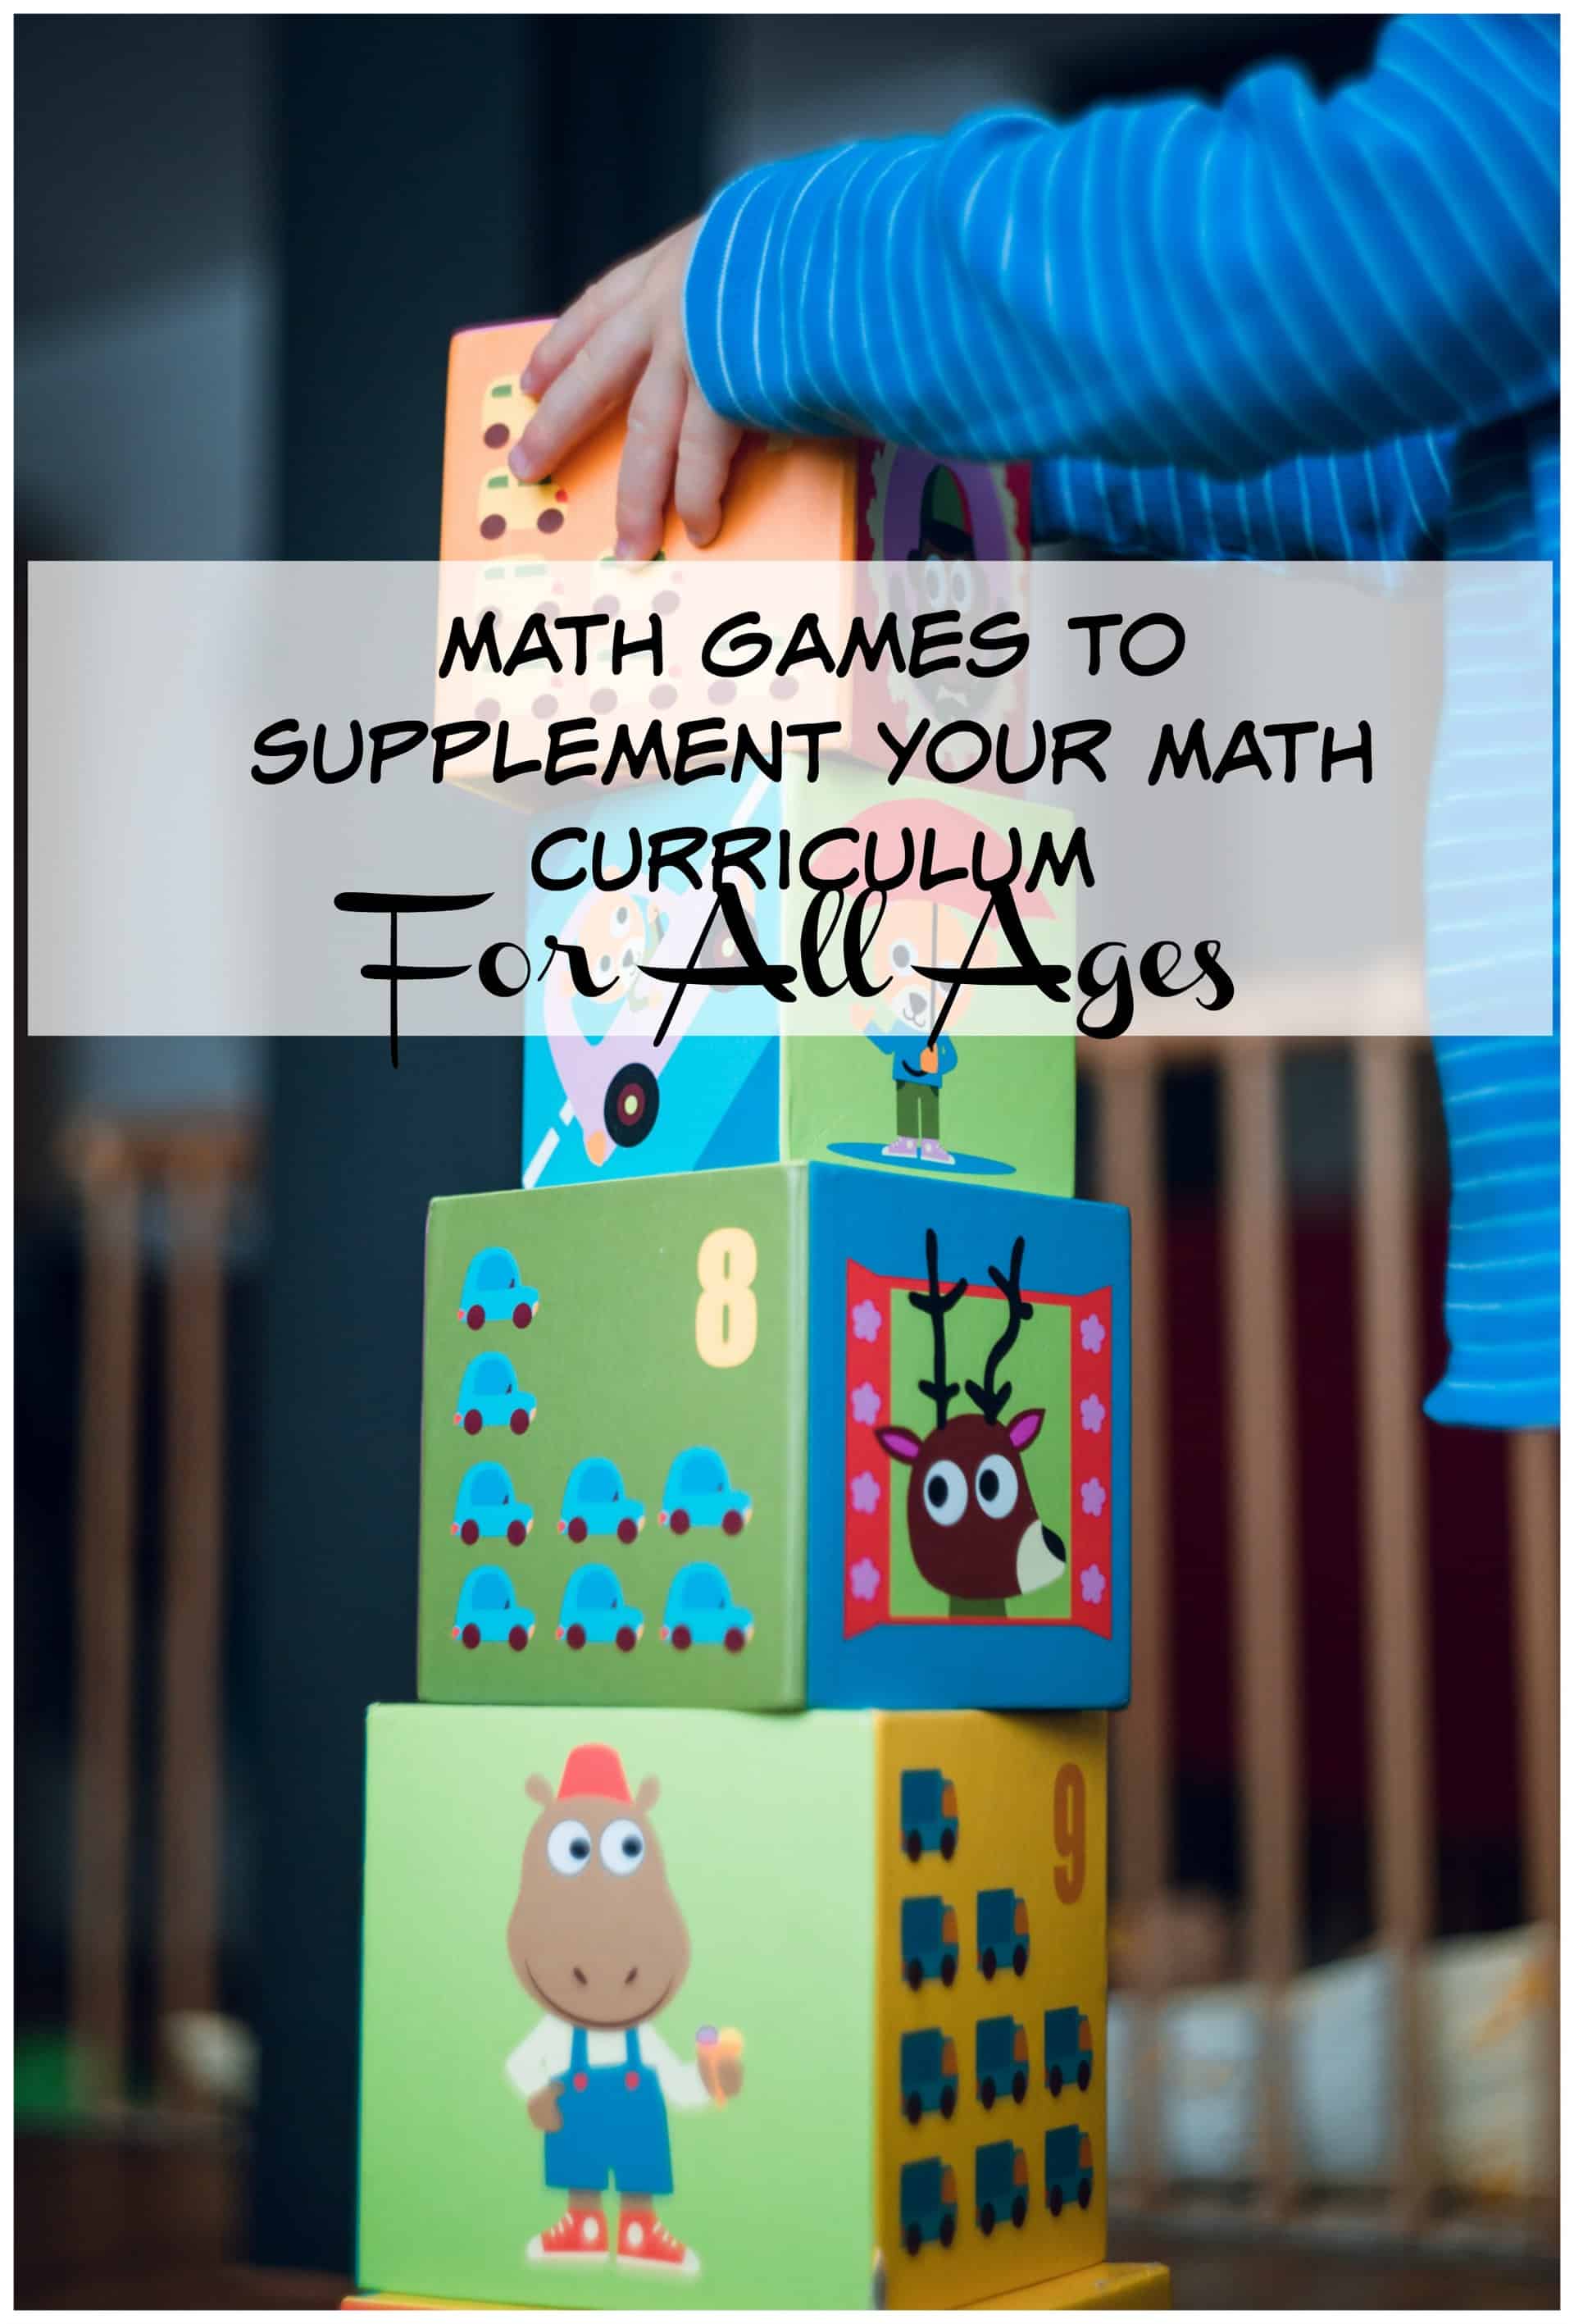 Four Supplemental Math Games to Enhance Any Math Curriculum